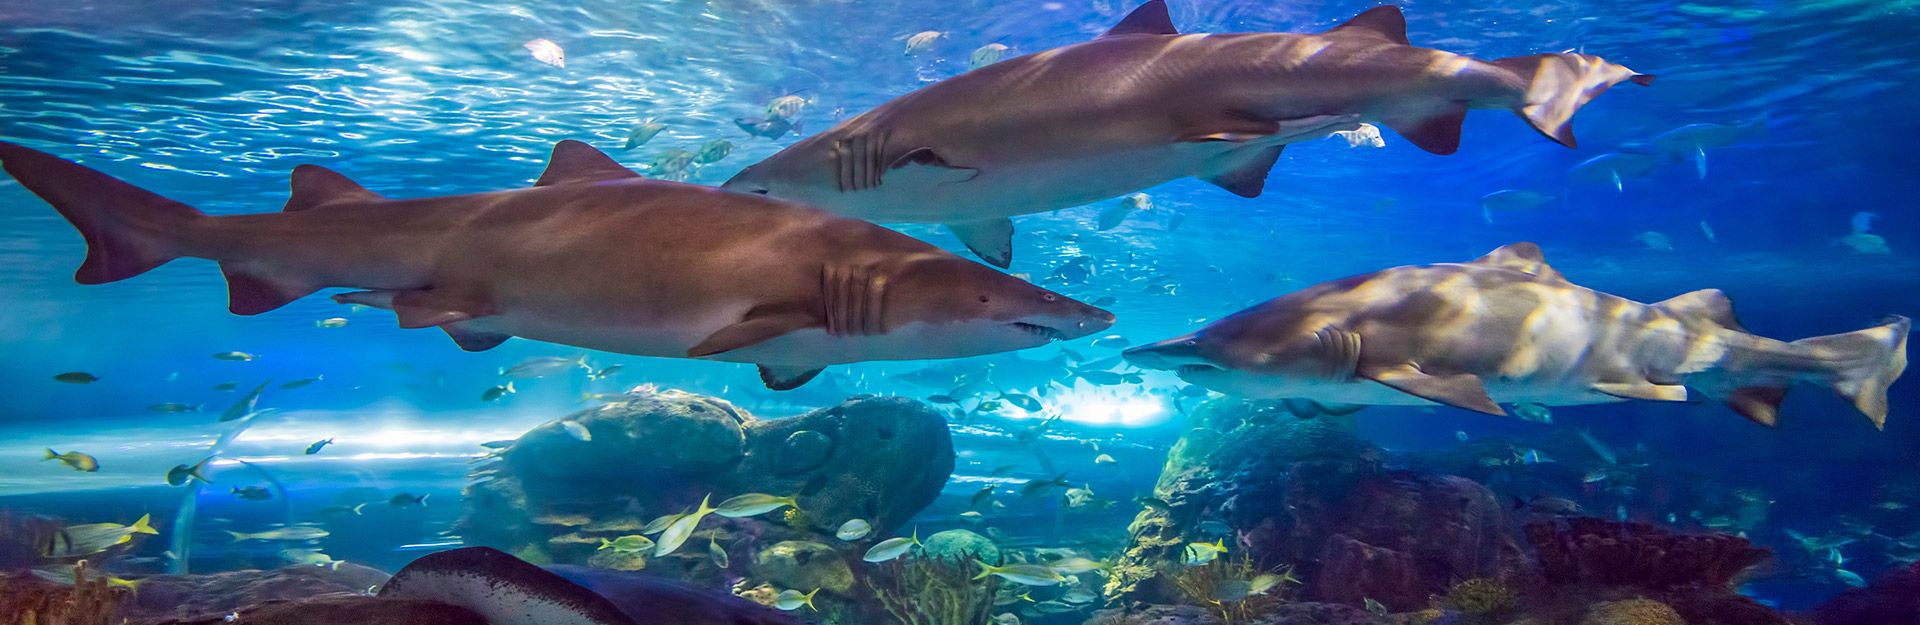 Ripley's Aquarium of Canada sharks